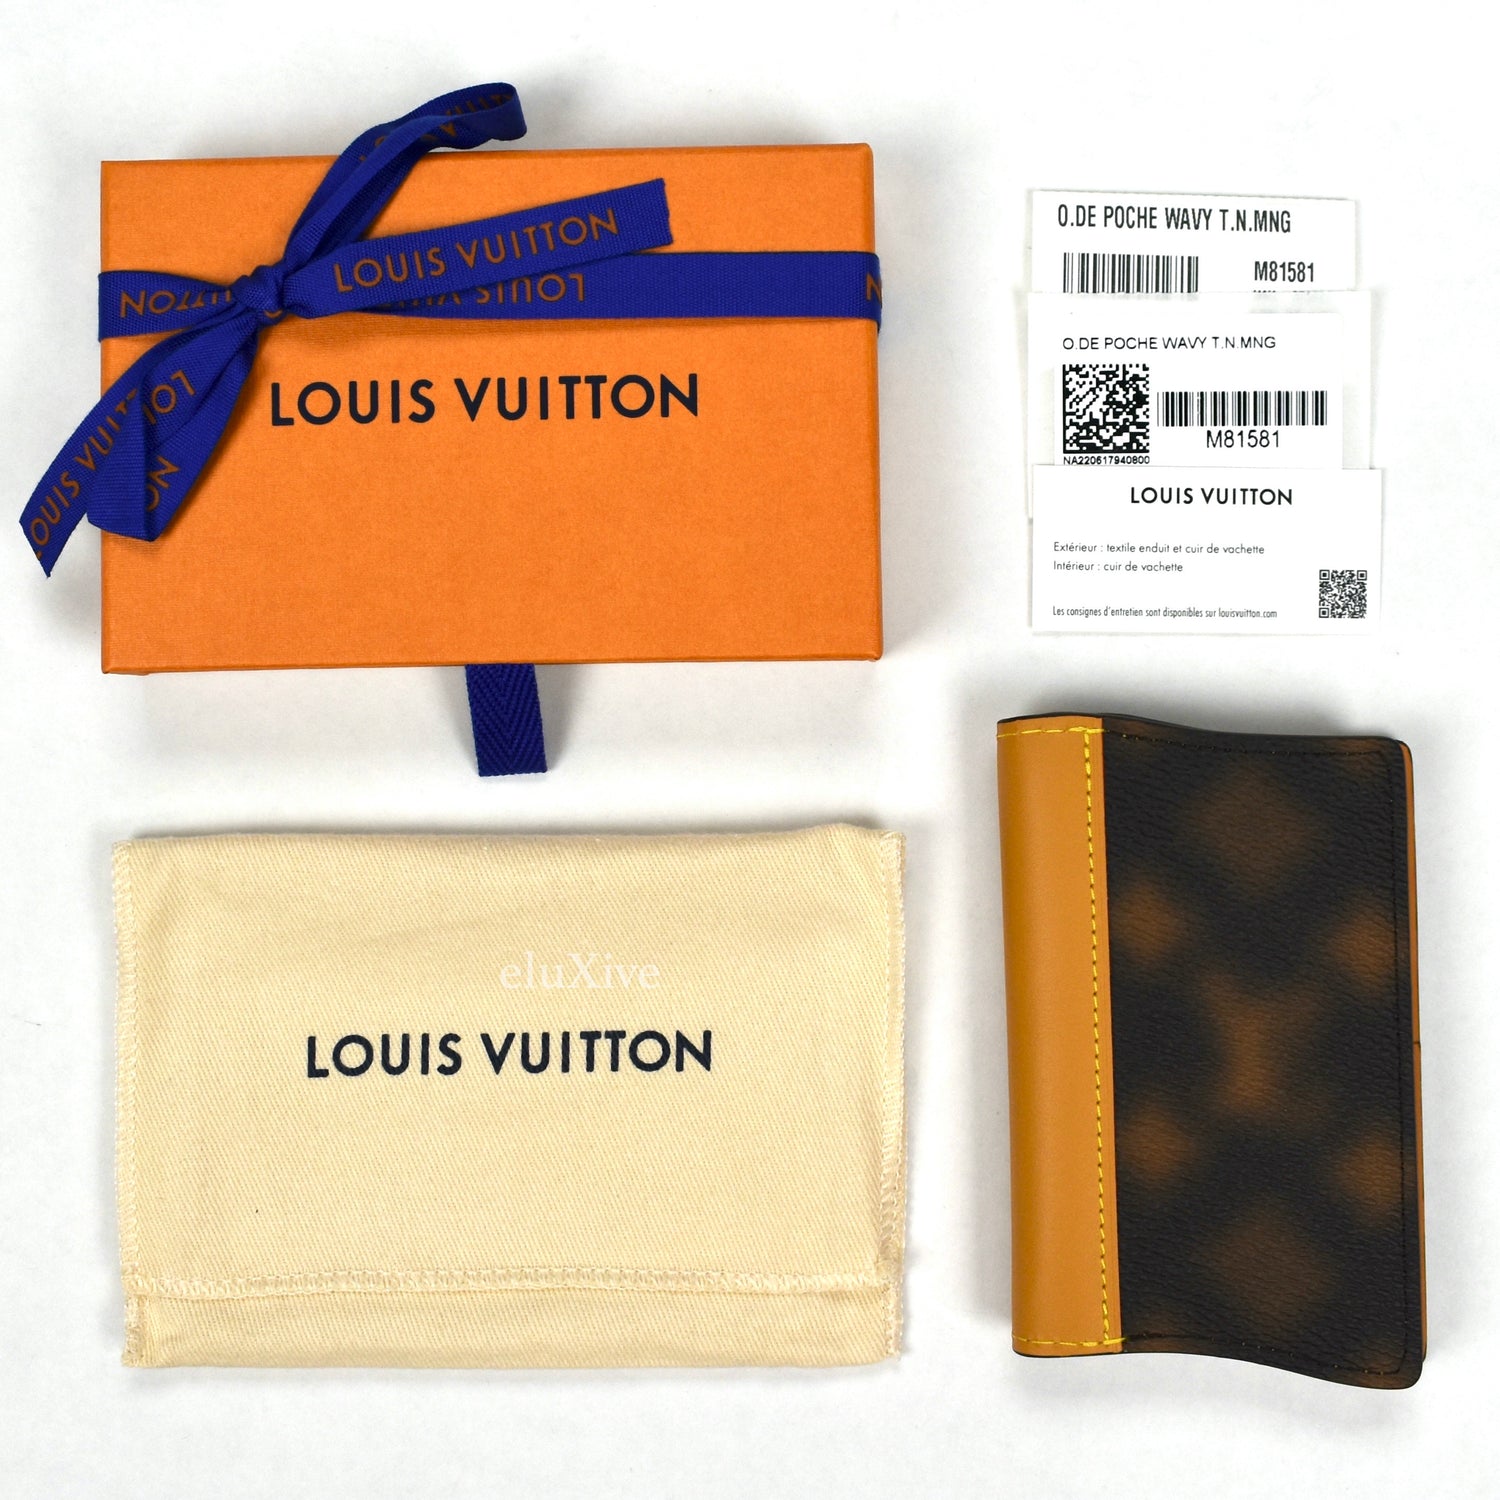 Money Bag - Louis Vuitton Xxl, Sculpture by Frost